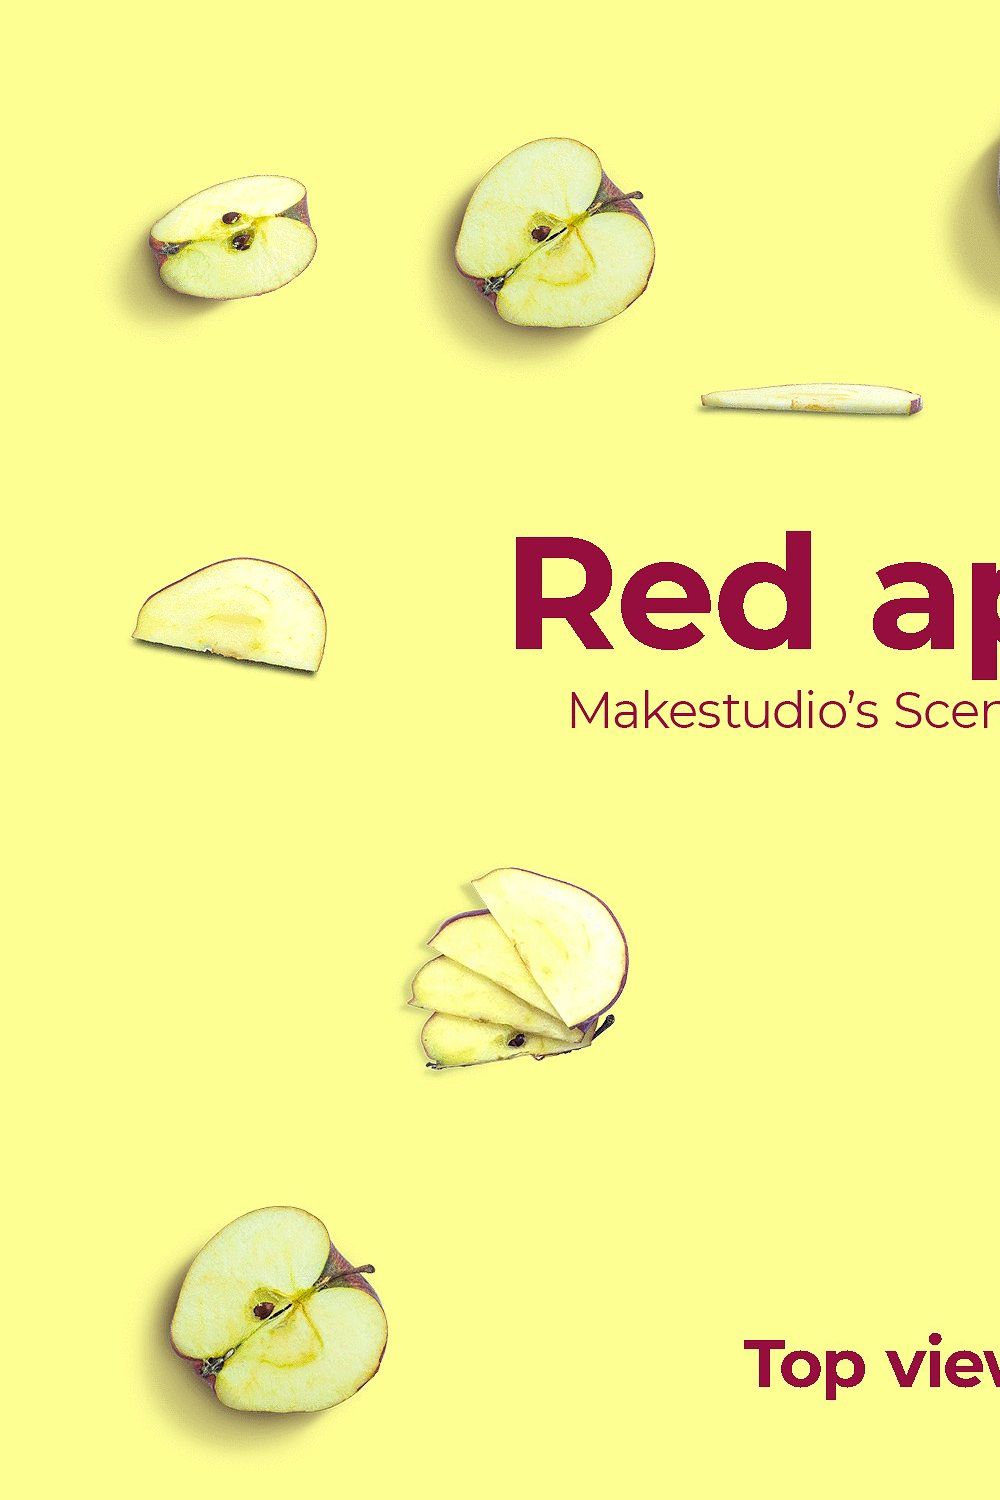 Red apple - Scene creator pinterest preview image.